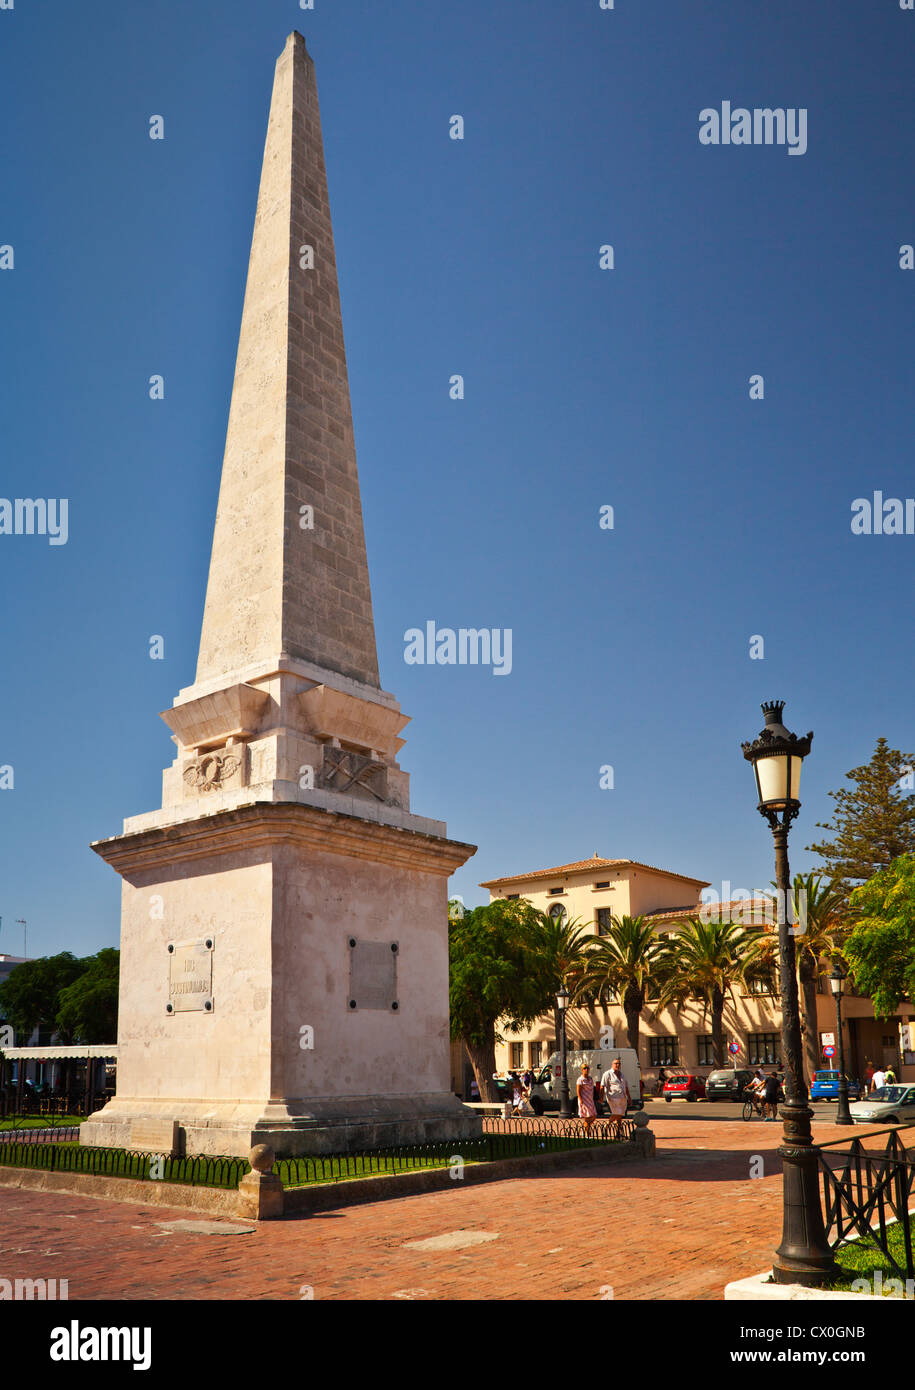 Monumento obelisco, Plaça d'es Nato, Ciutadella. Foto Stock